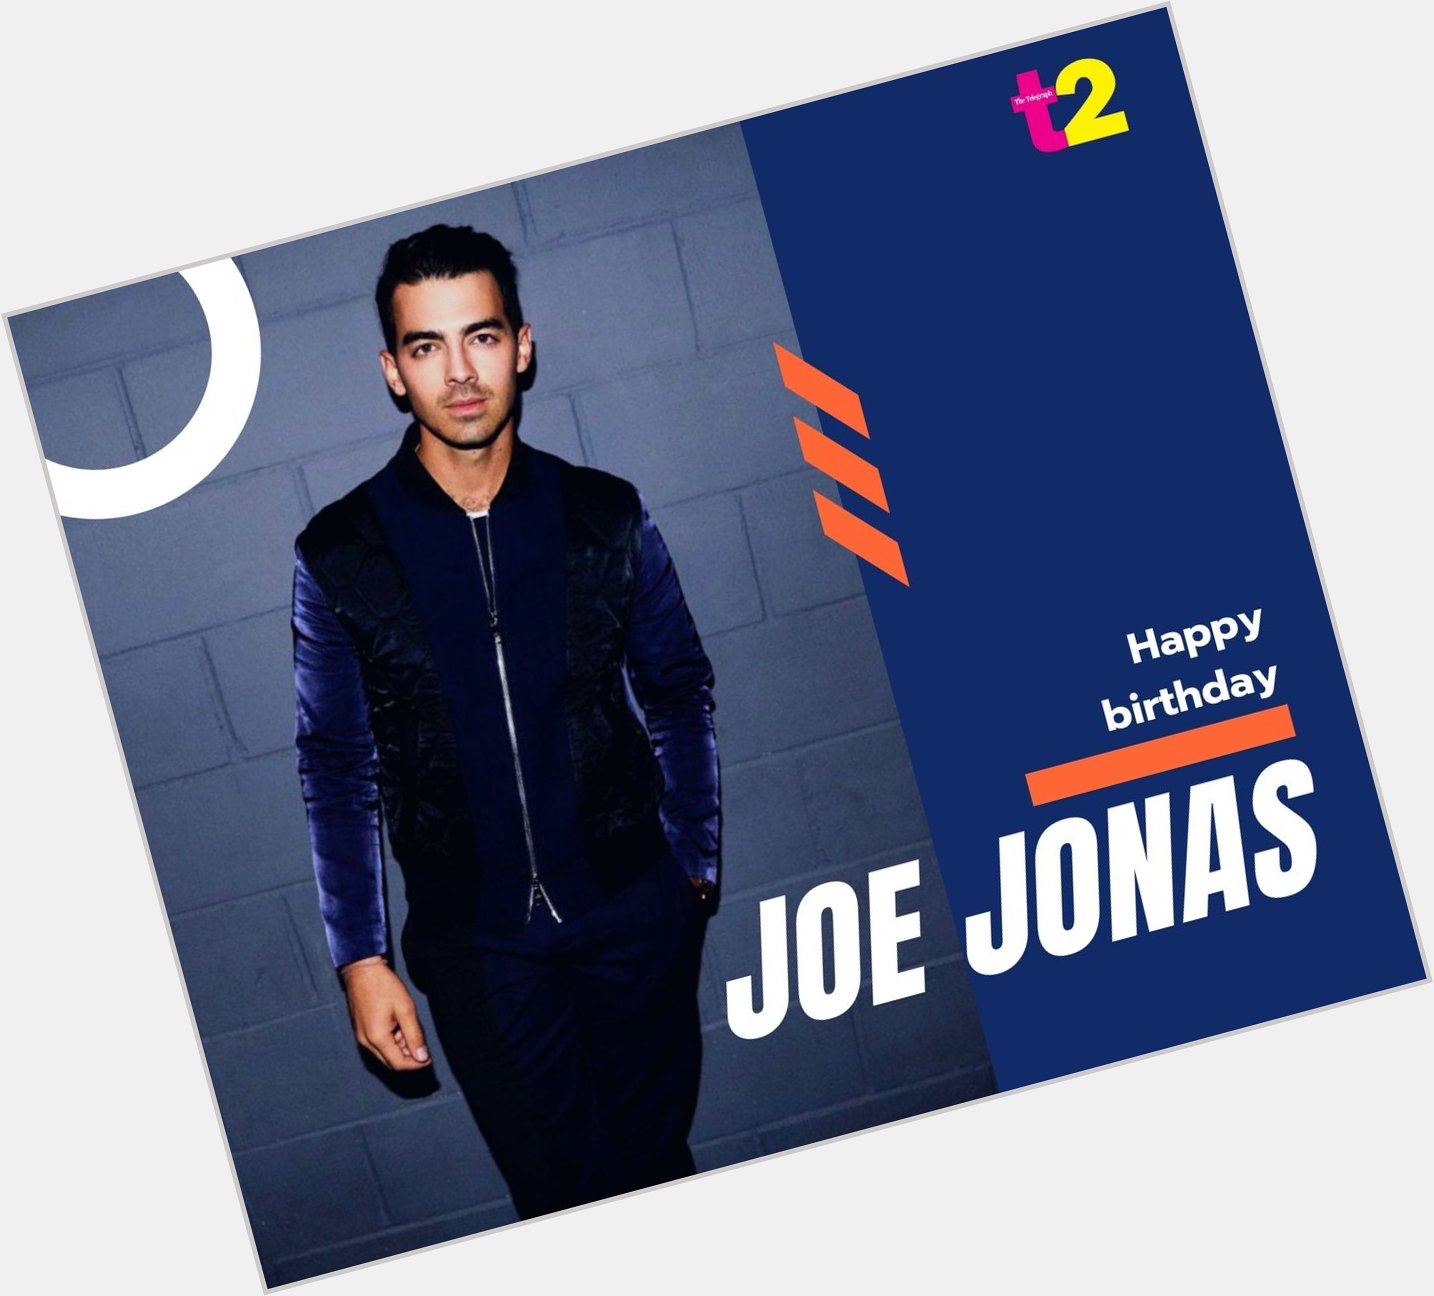 Let s wish Joe Jonas a very happy birthday while enjoying a cup of Joe! Keep making good music 